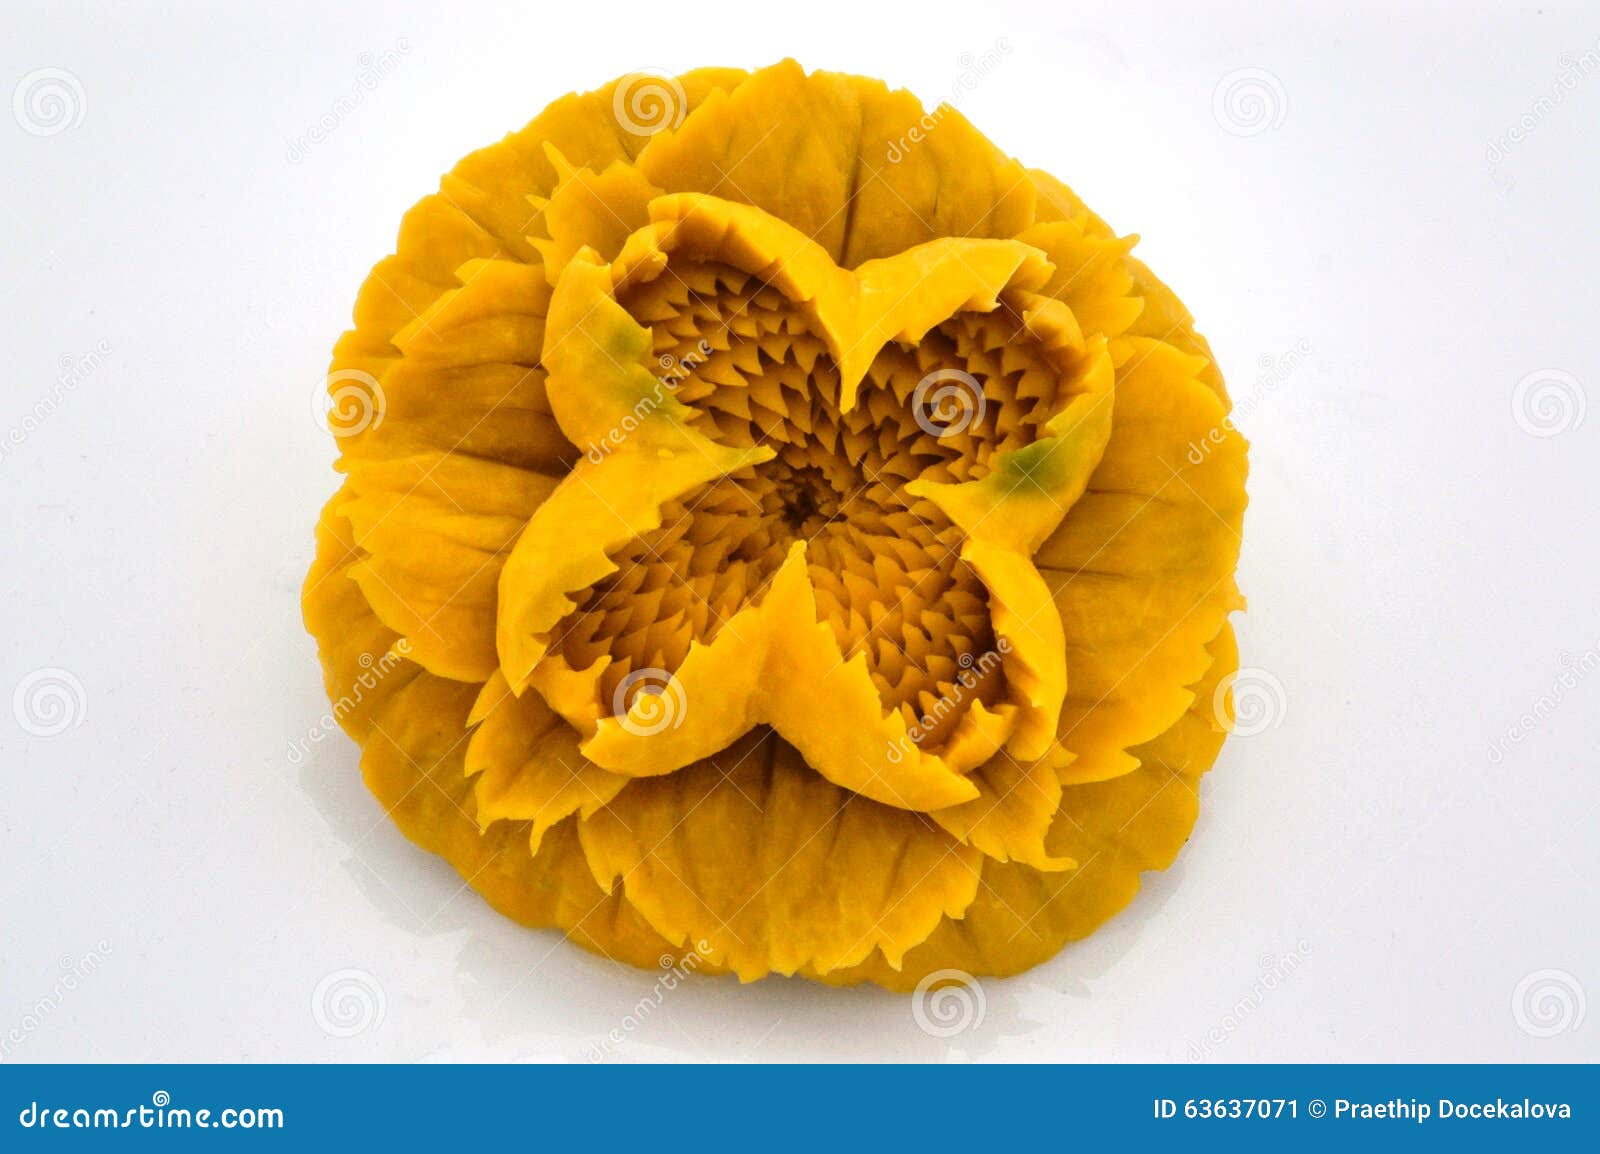 Pumkin carvings stock image. Image of cantaloupe, flowers - 63637071